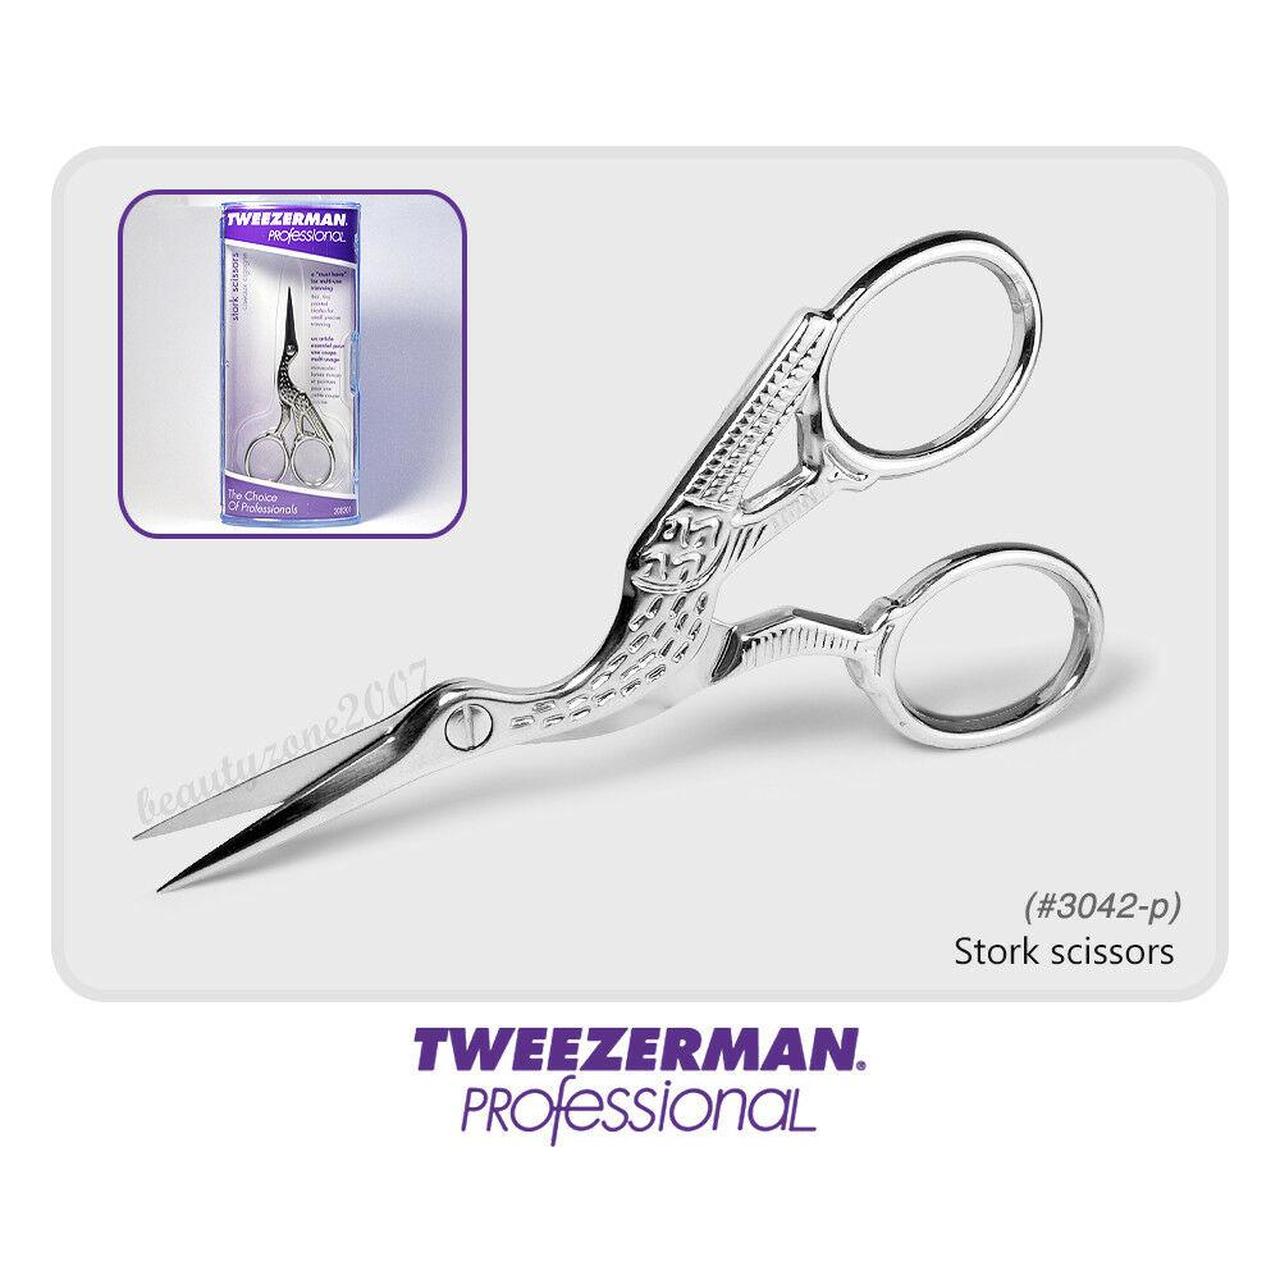 Tweezerman Professional Stork Scissors – ann-webb-skin-care